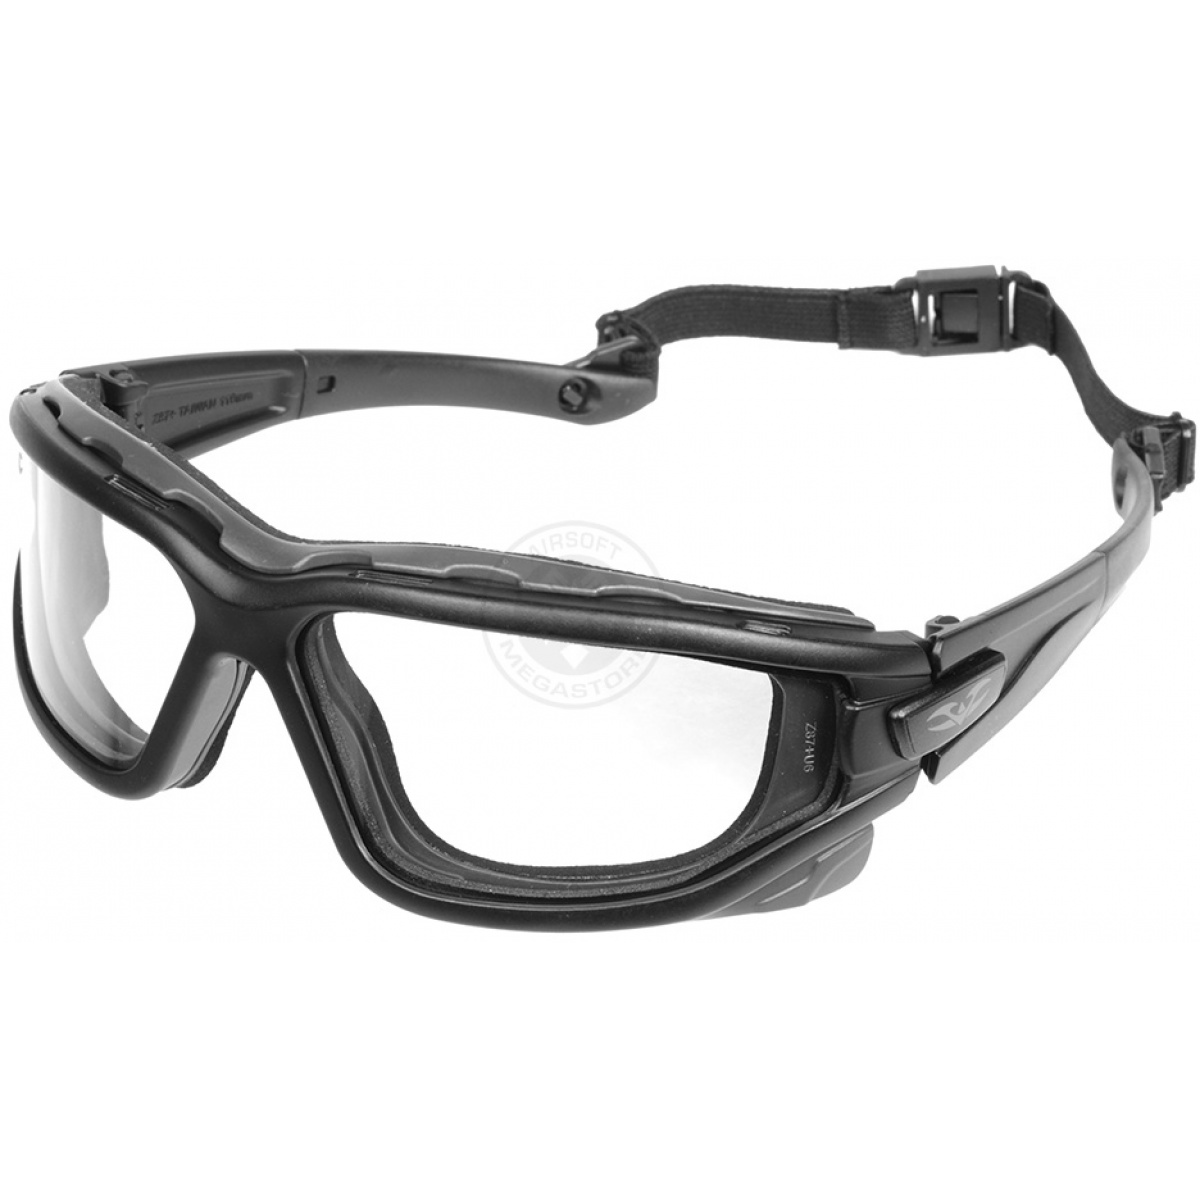 Valken Zulu Tactical Goggles Dual Pane Grey Lens Airsoft Free Shipping 